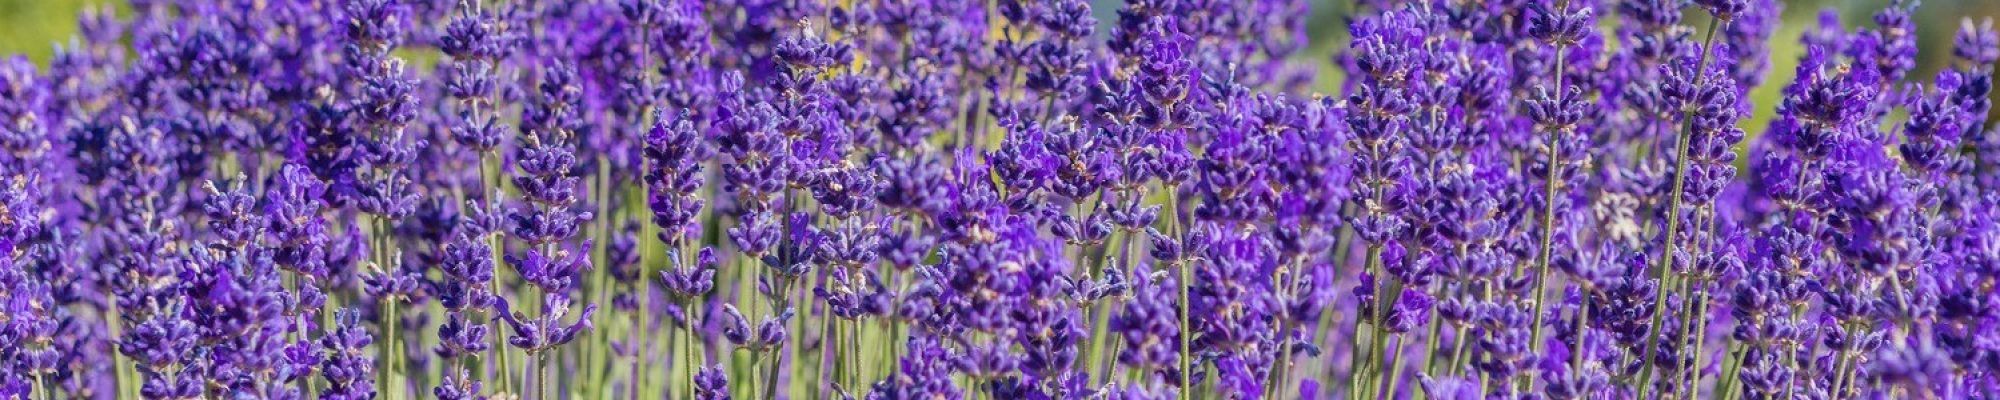 lavender-fields-tx